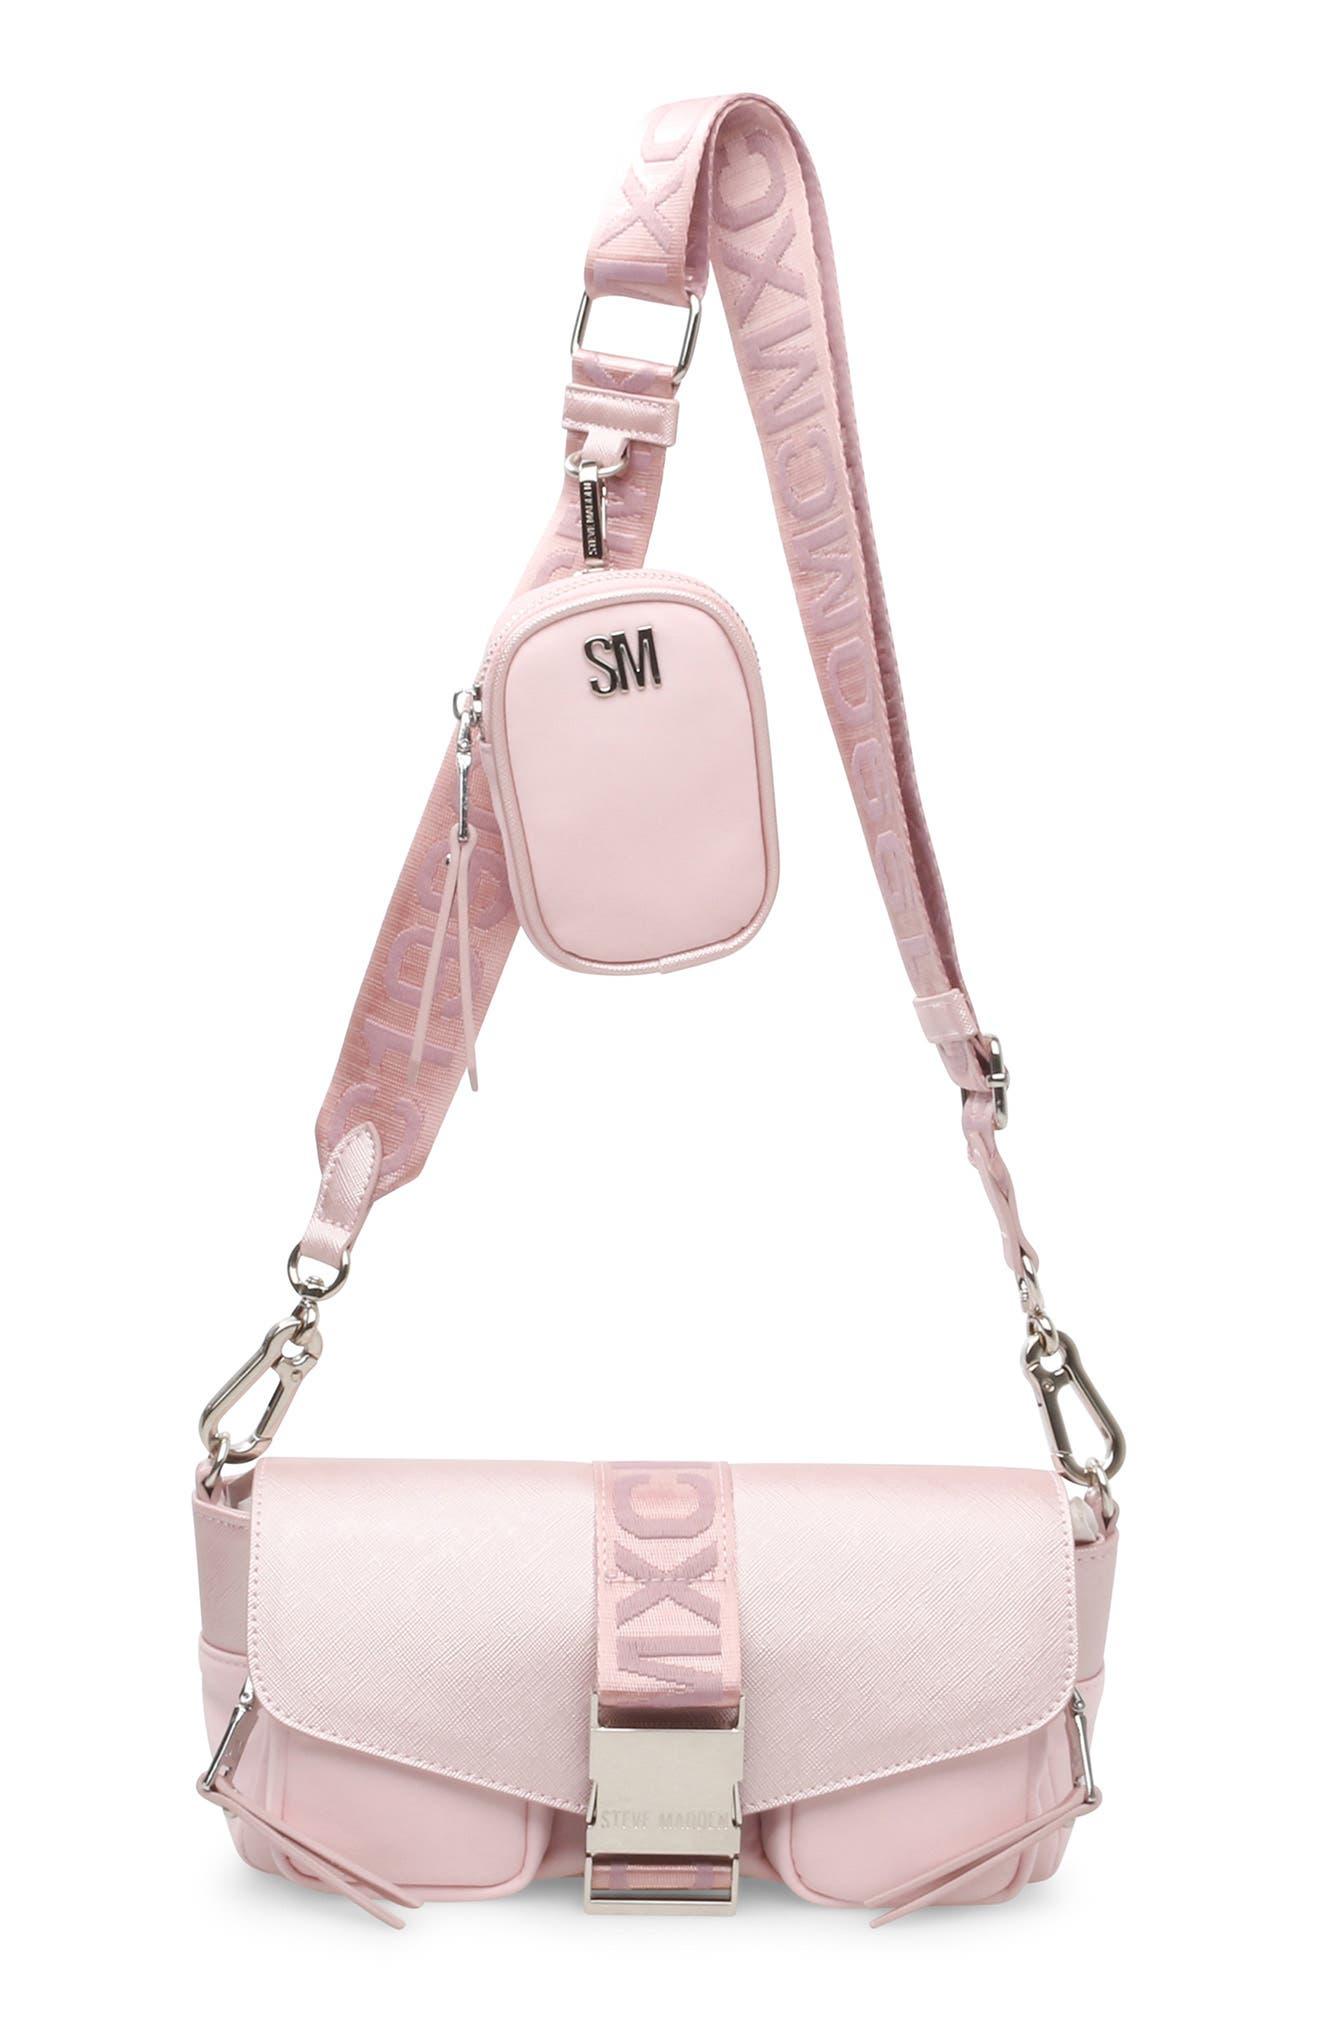 Steve Madden Move Utility Messenger Bag in Pink | Lyst